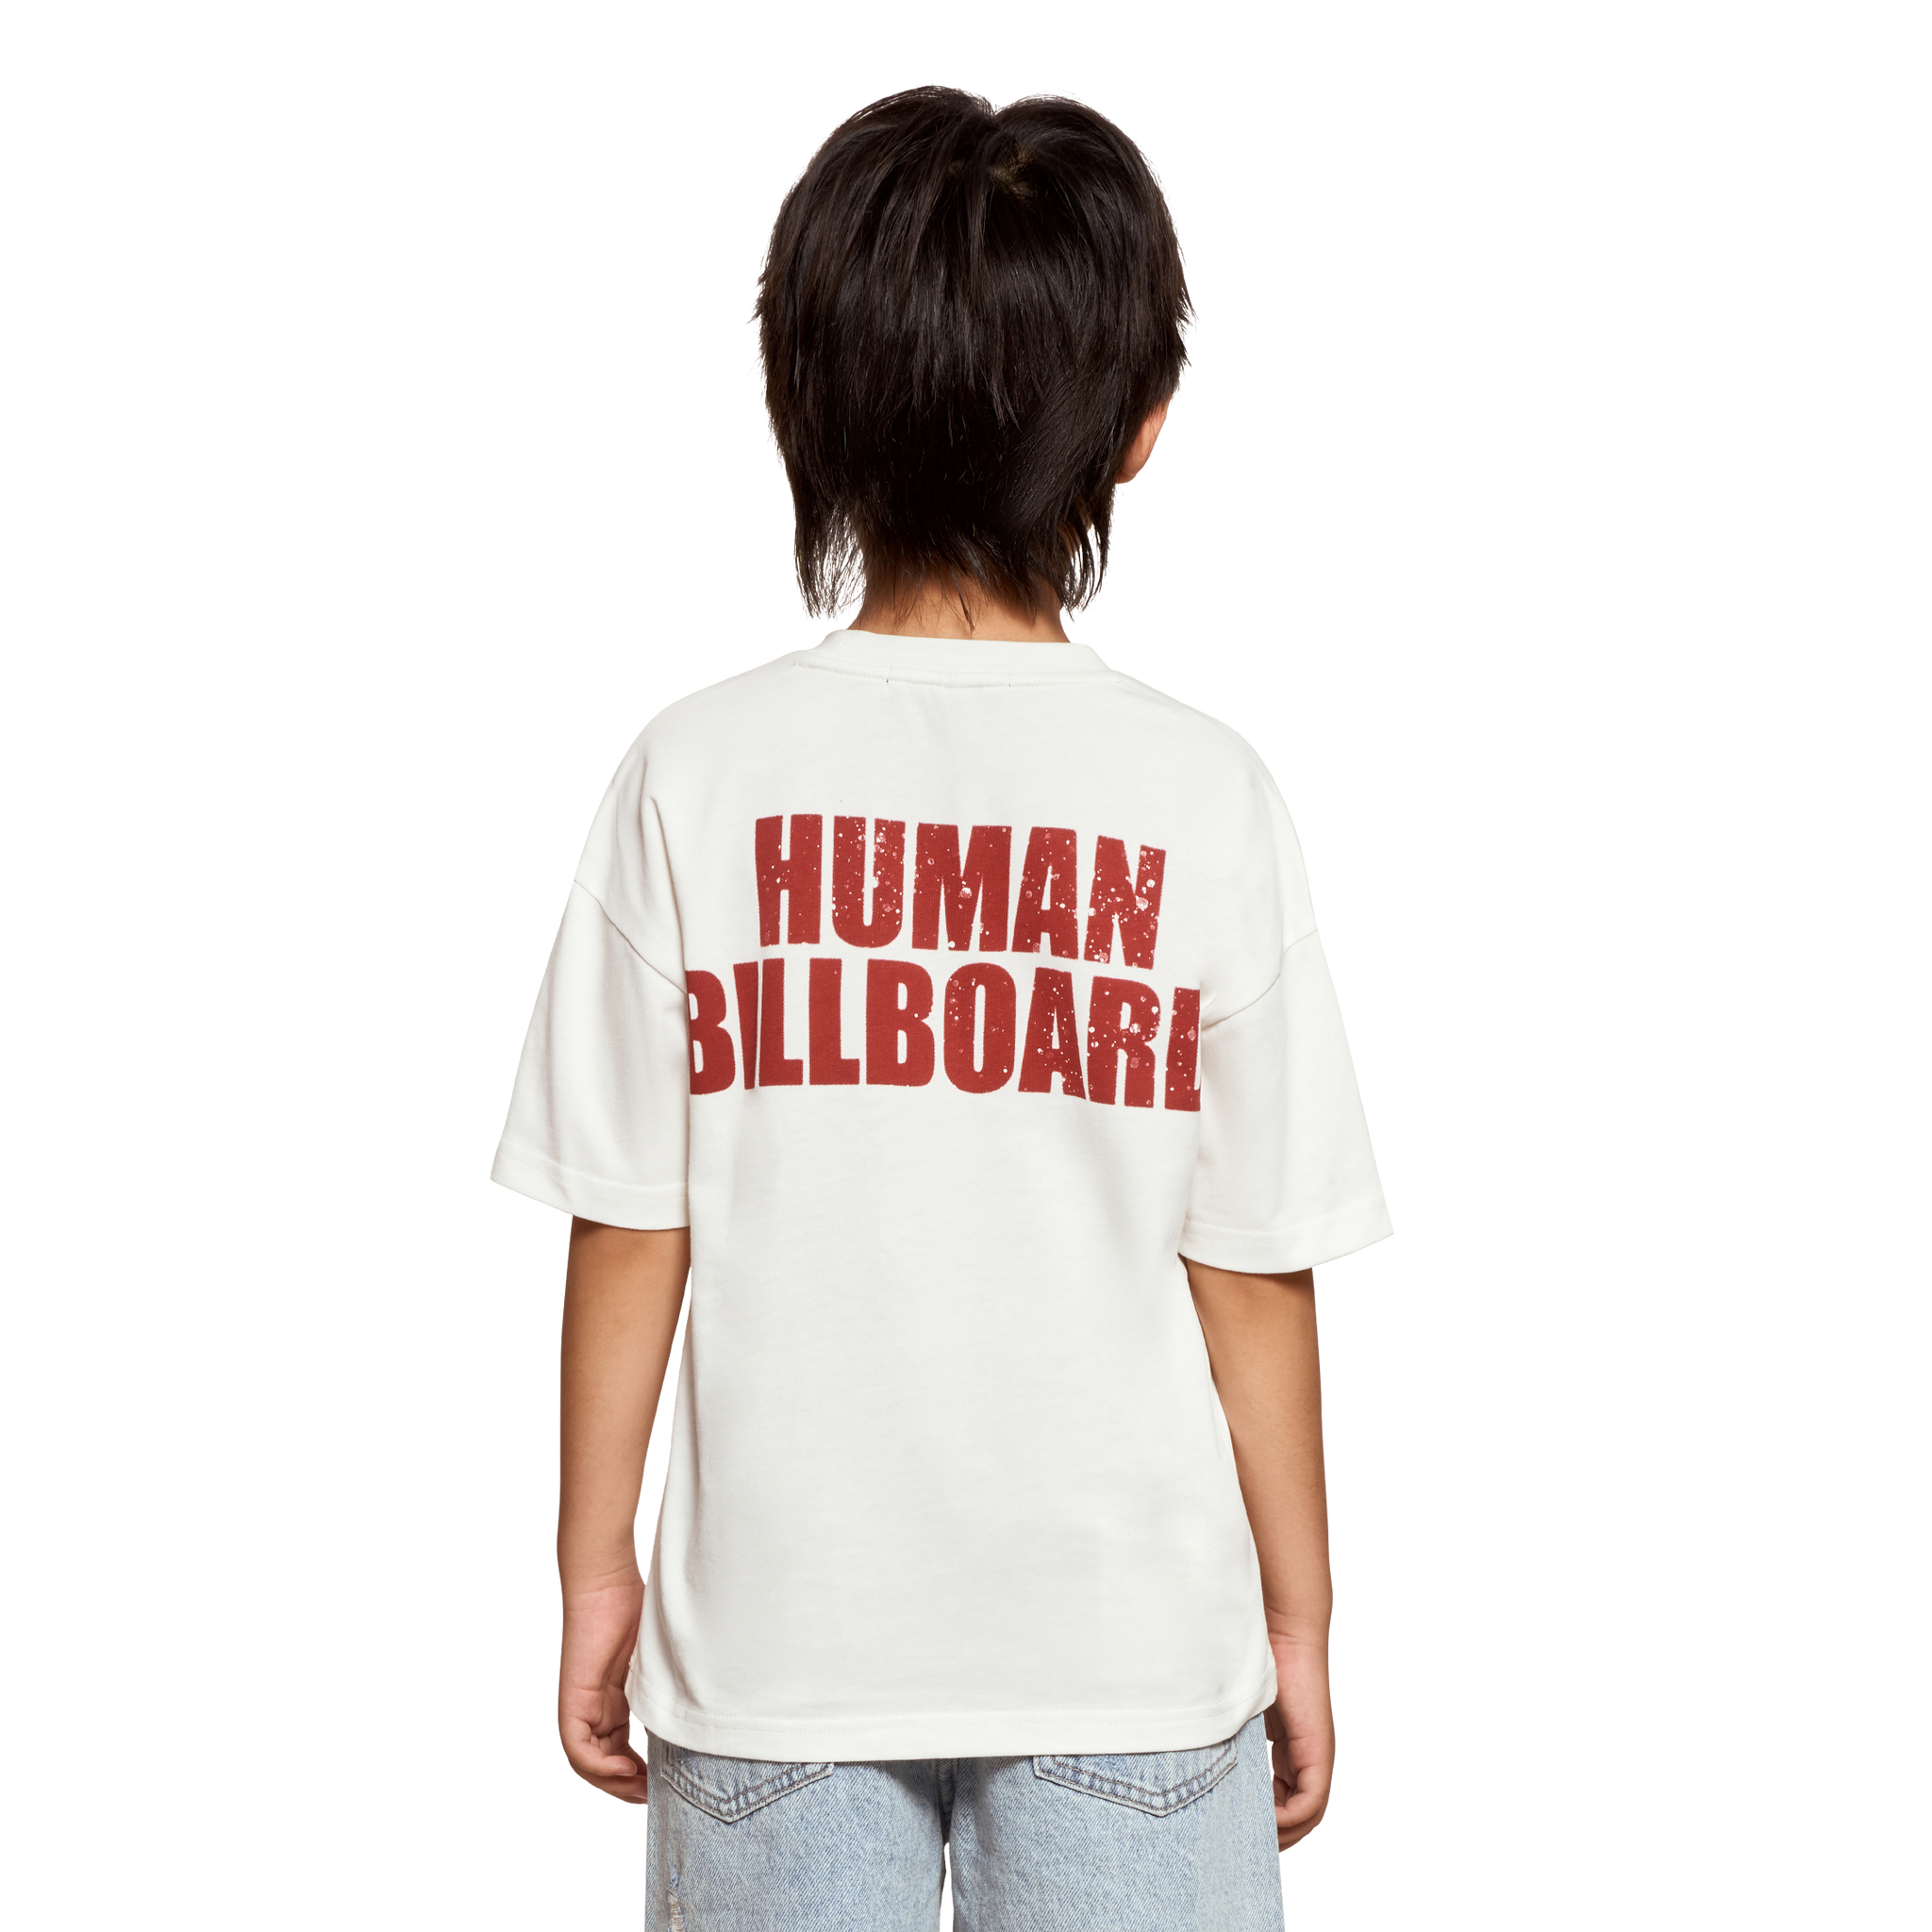 HUMMAN BILLBOARD Kids T-SHIRT- WHITE